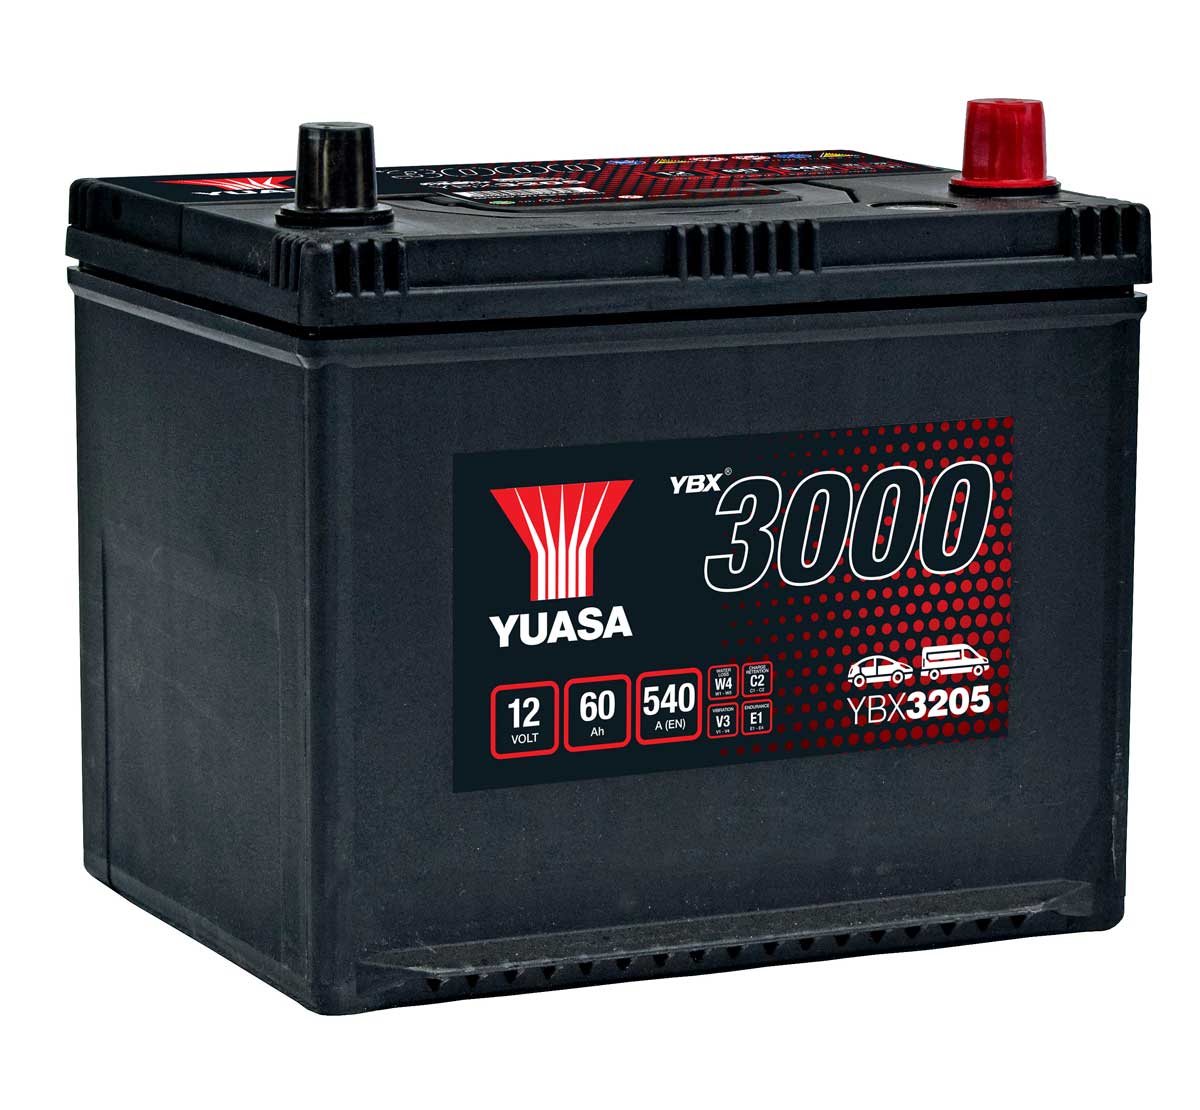 Yuasa YBX3205 12V 205 Size Car Battery